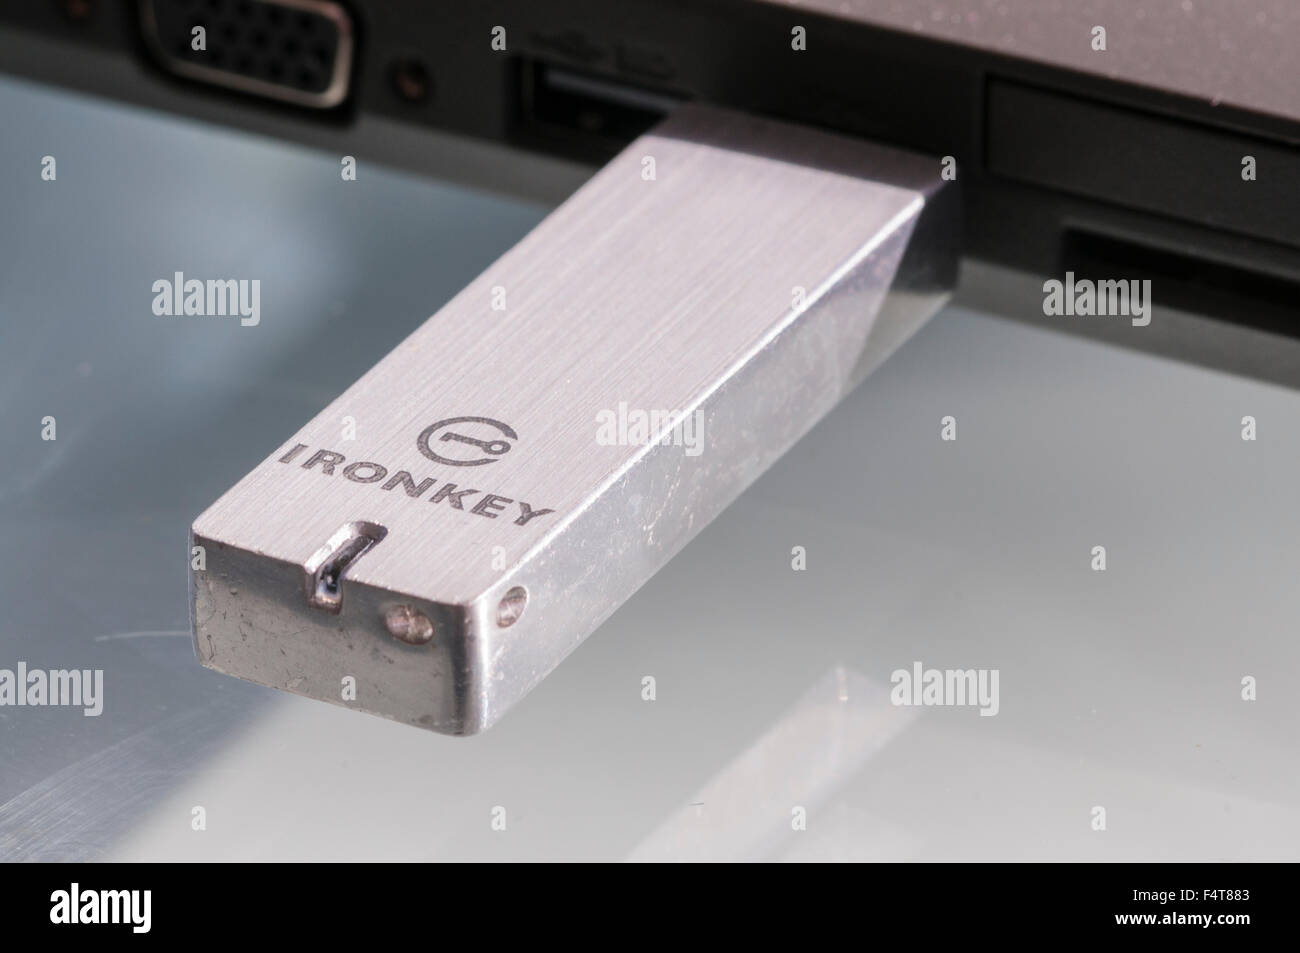 IronKey secure USB Speicher Stick Memorystick Stockfoto